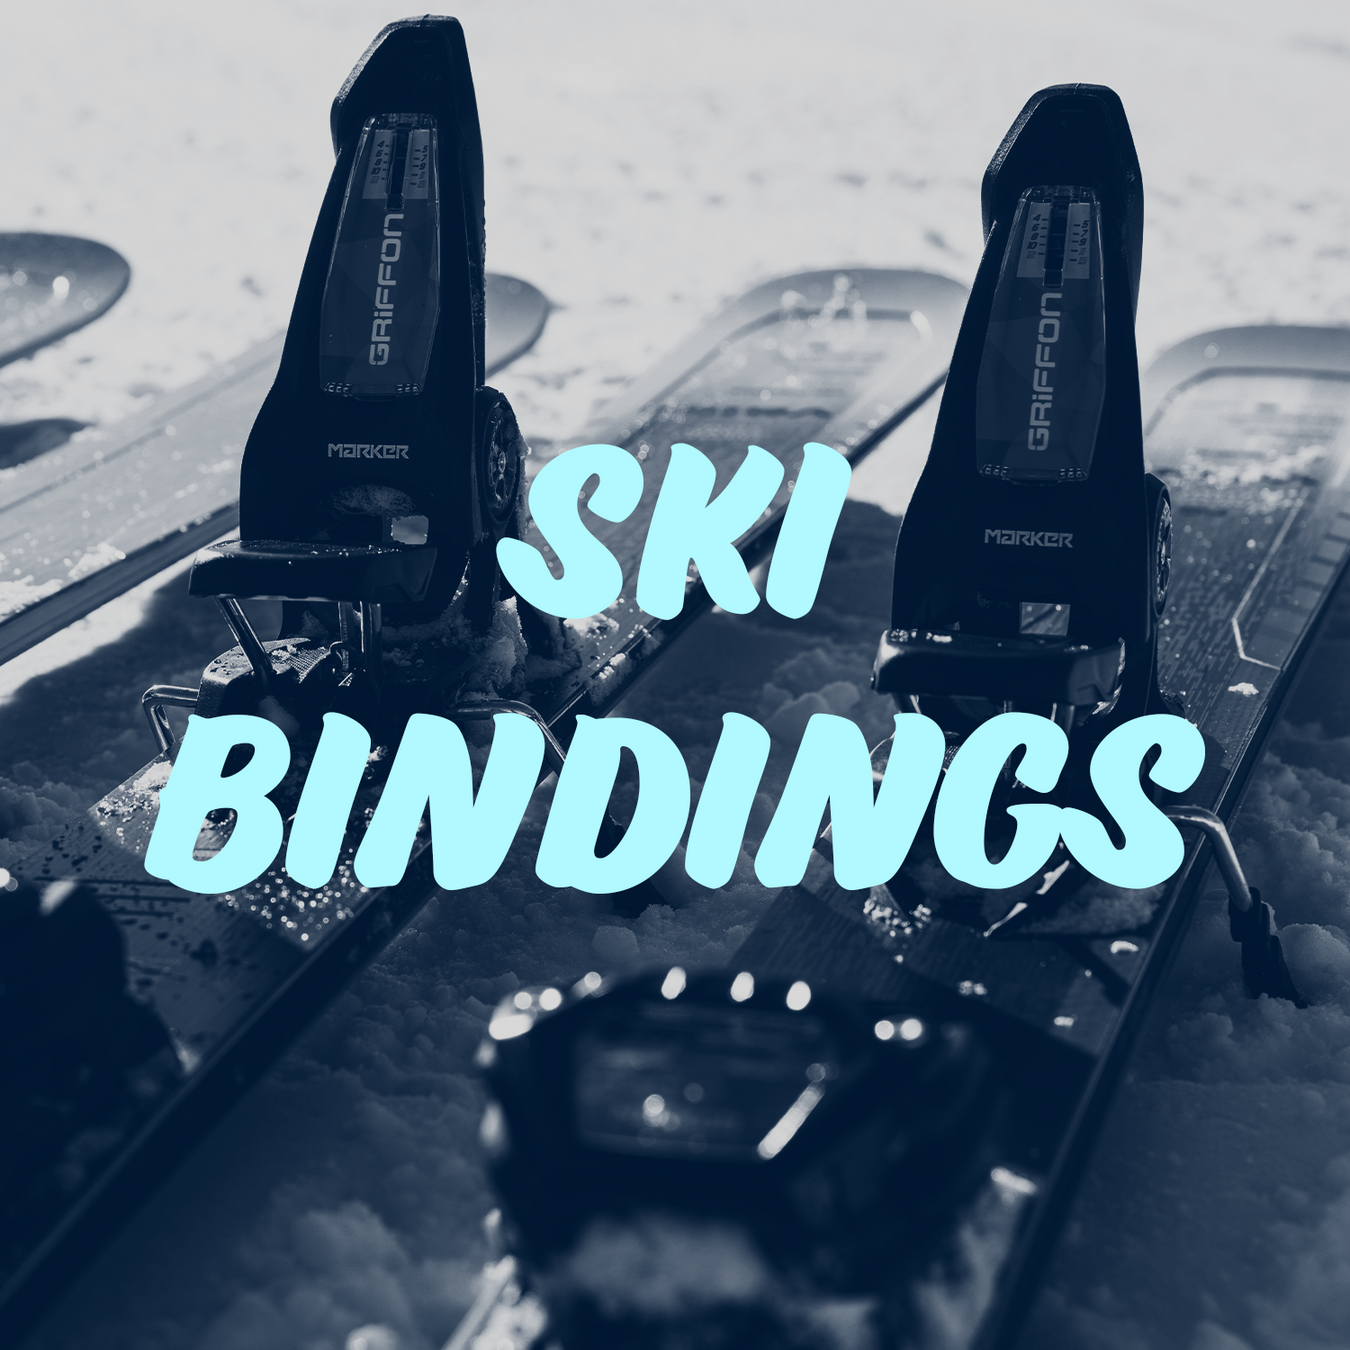 Ski Boots — Tagged k2 — Ski Pro AZ